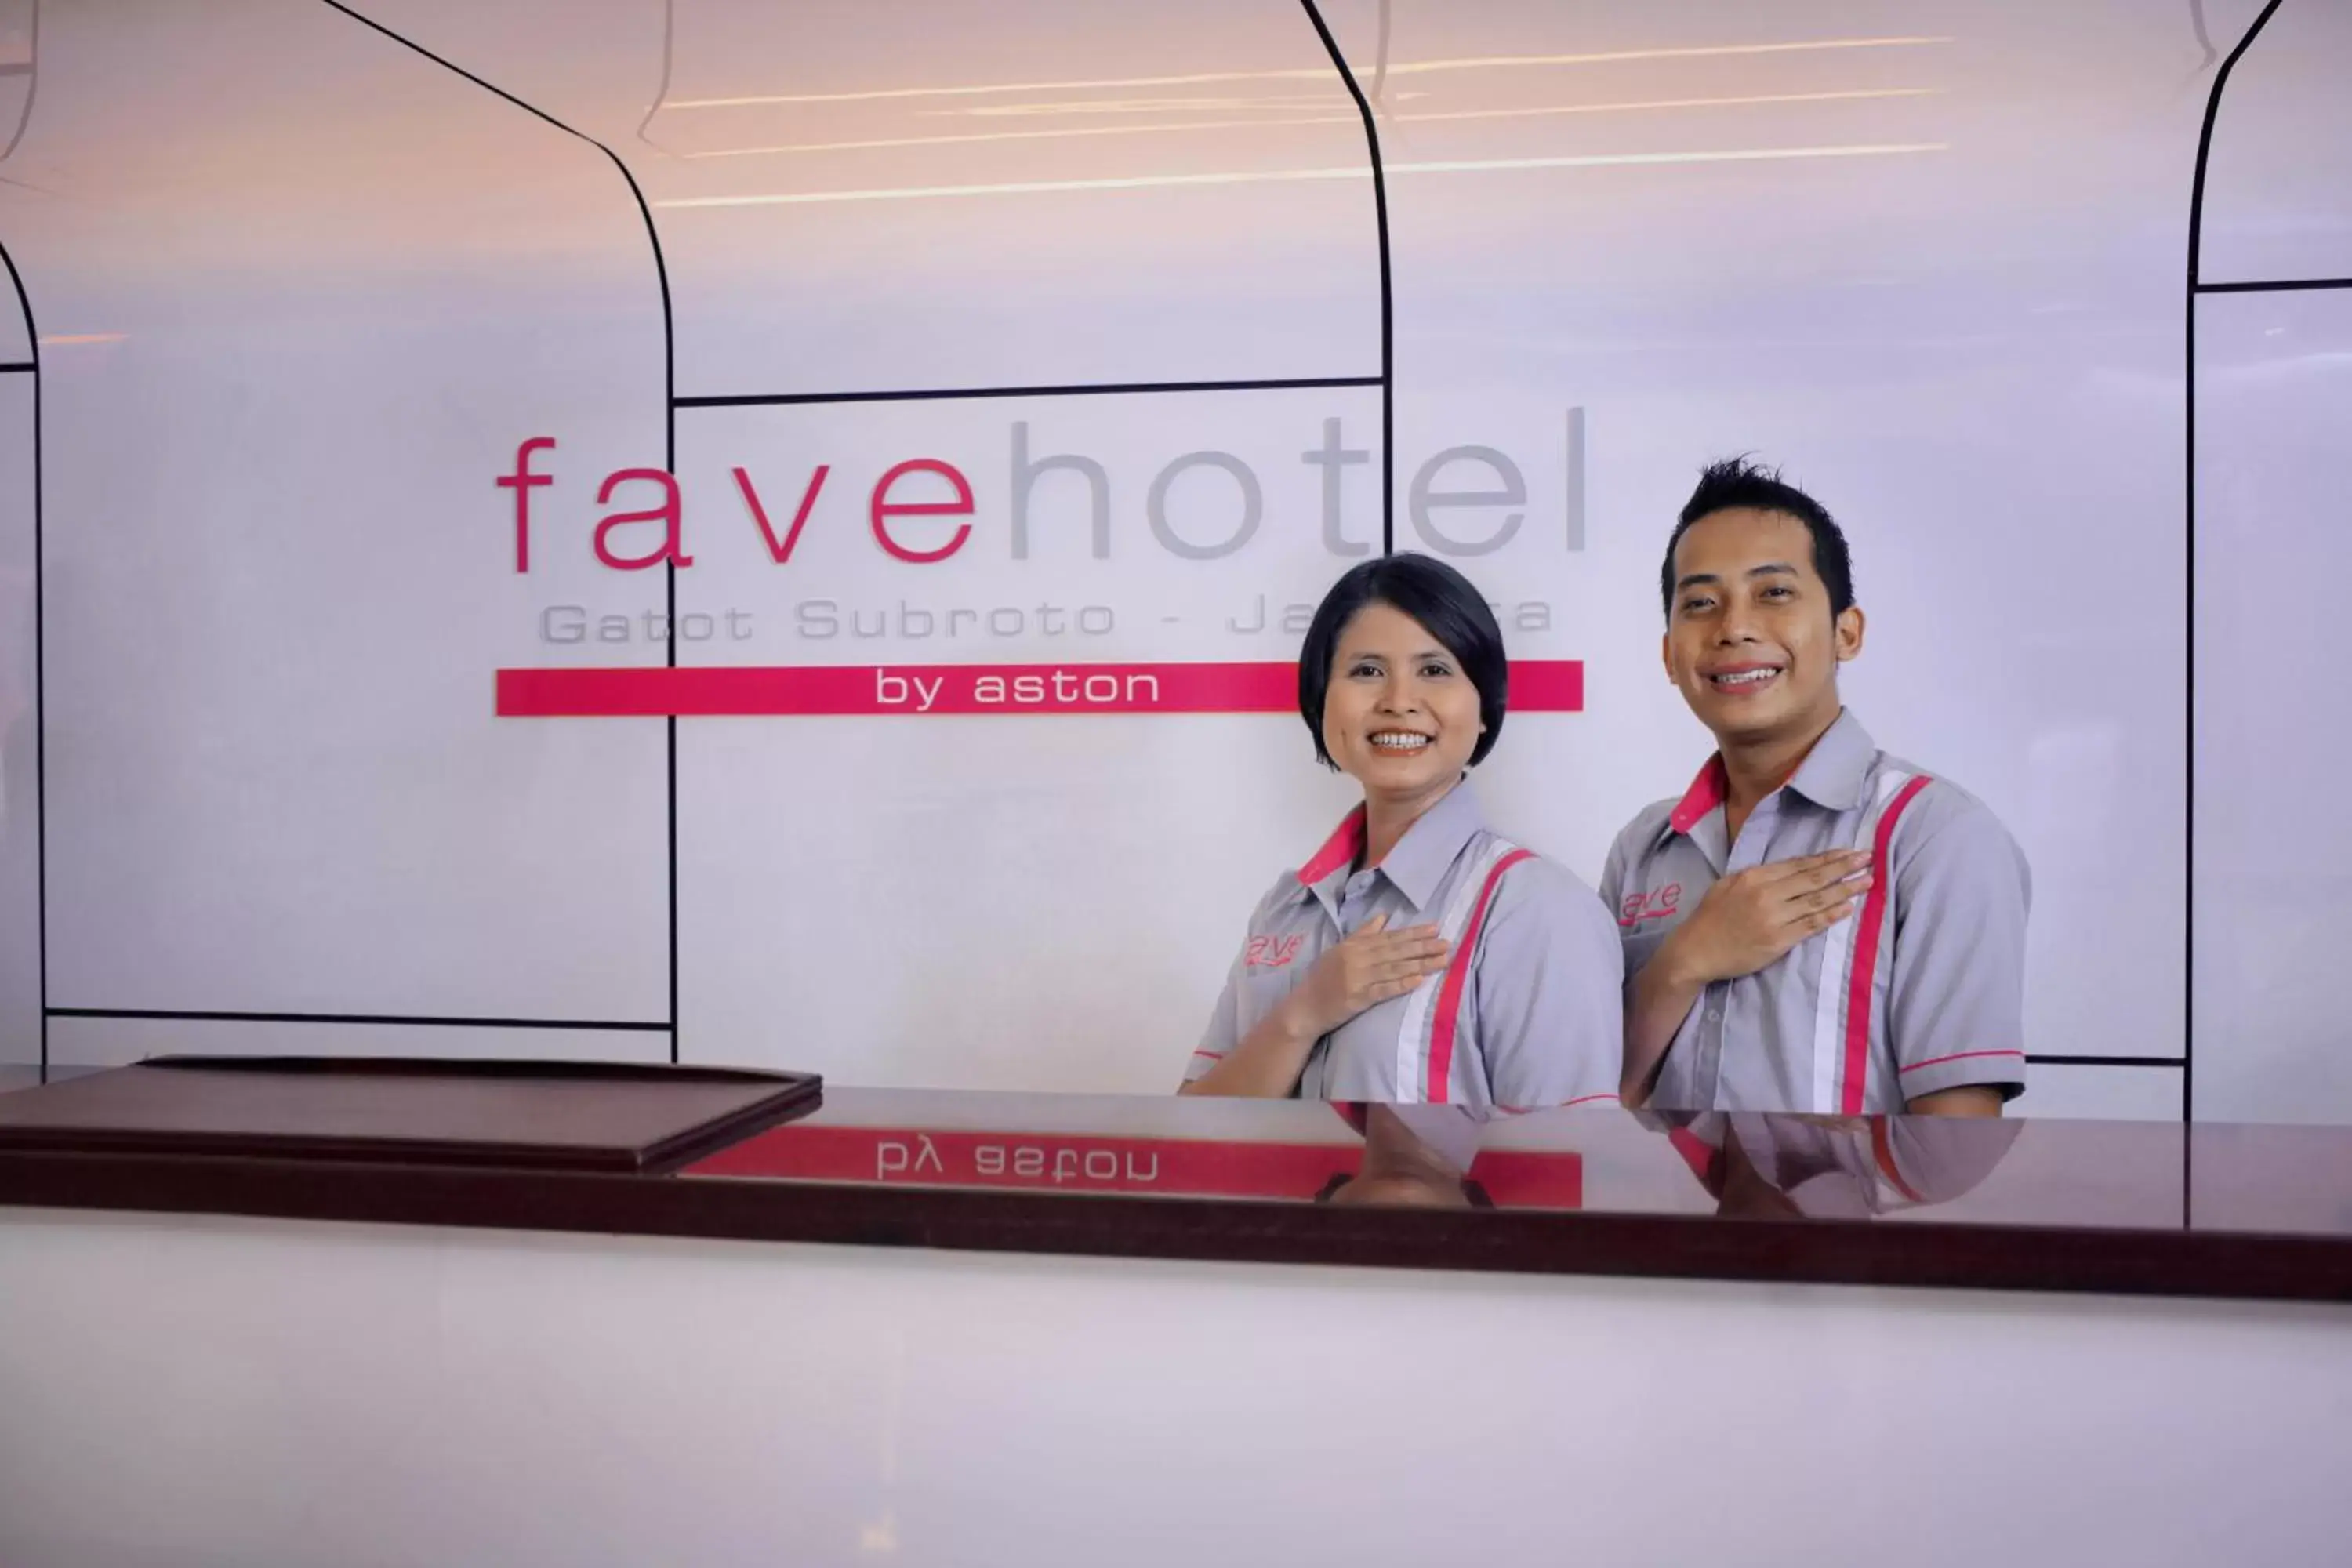 Staff in favehotel Gatot Subroto Jakarta